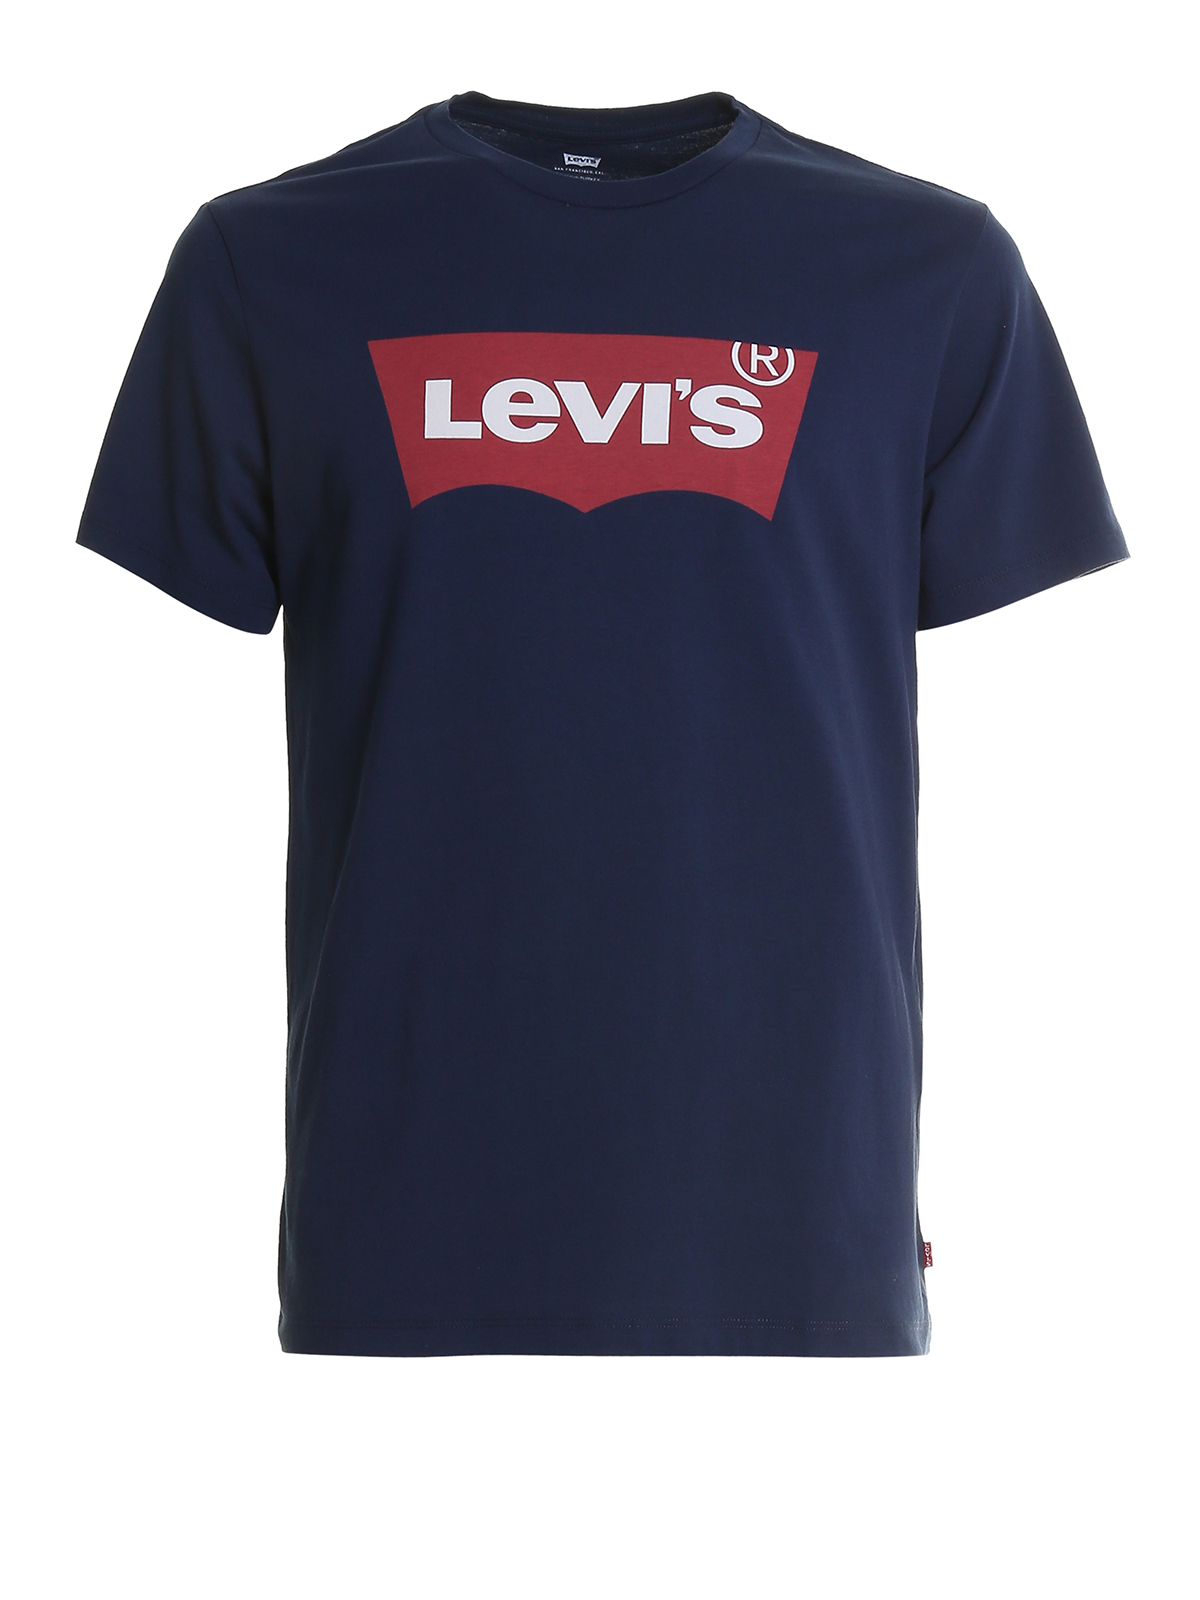 levis t shirt blue logo